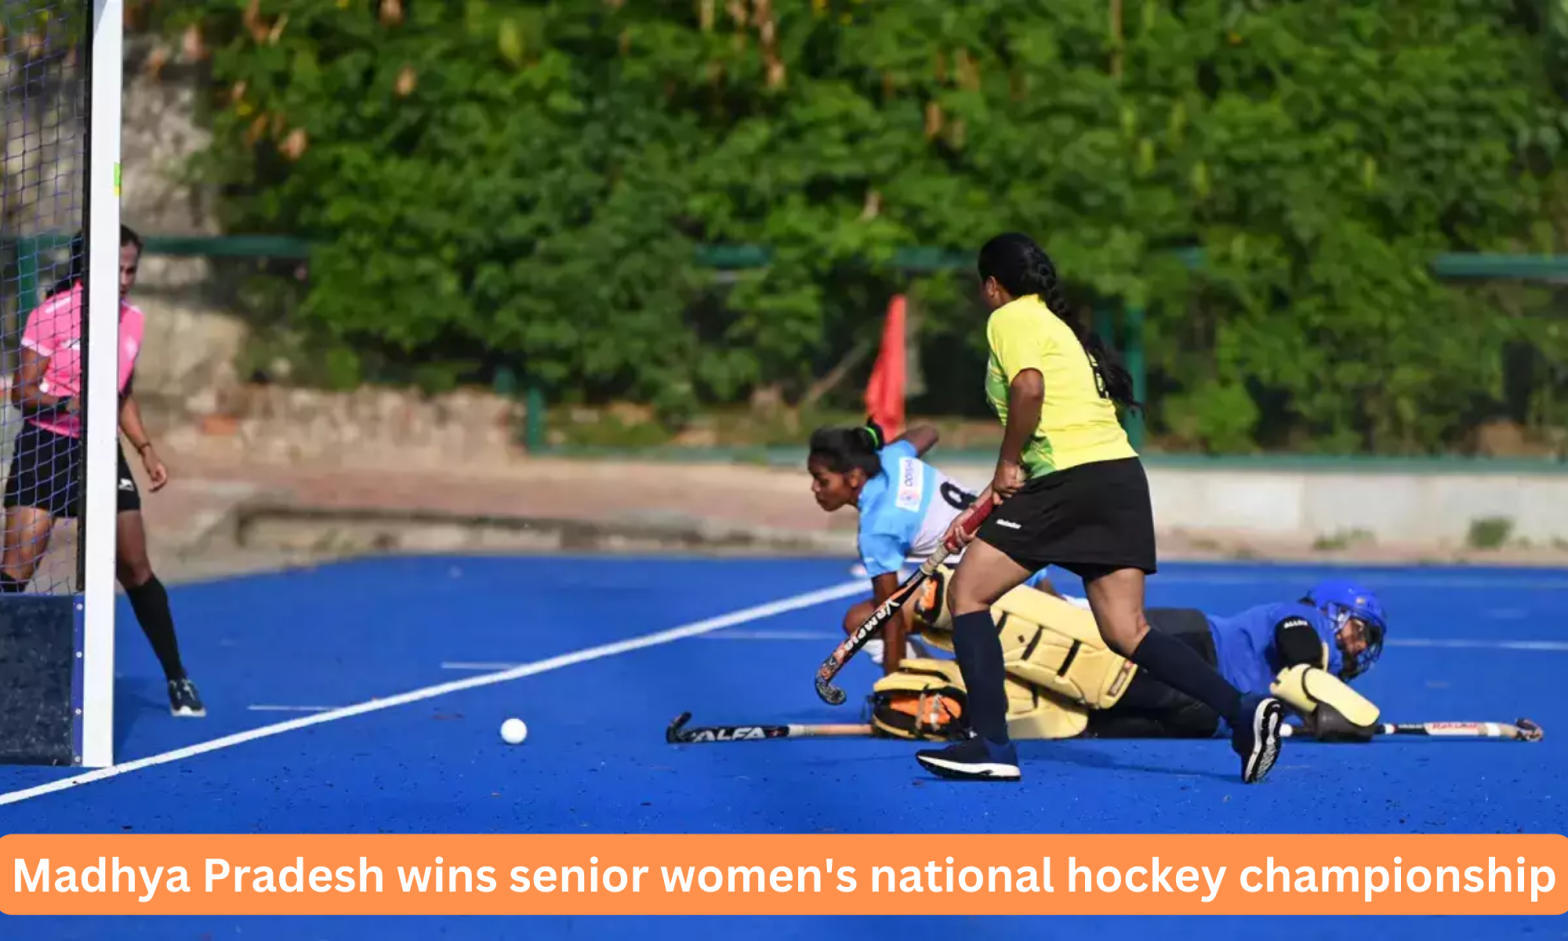 Madhya Pradesh wins senior women's national hockey championship